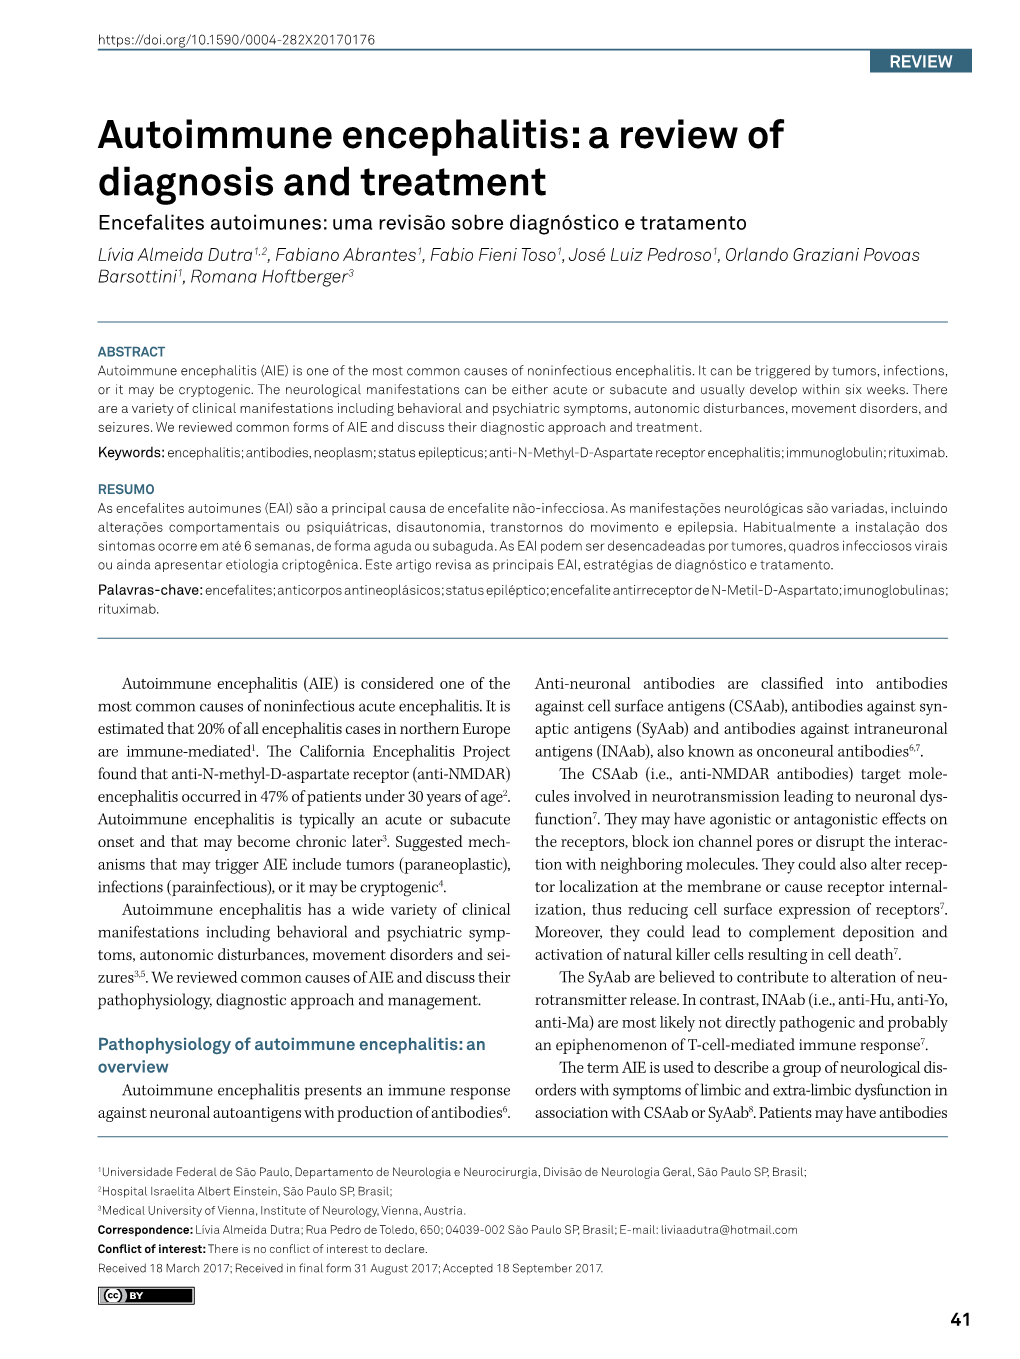 Autoimmune Encephalitis: a Review of Diagnosis and Treatment